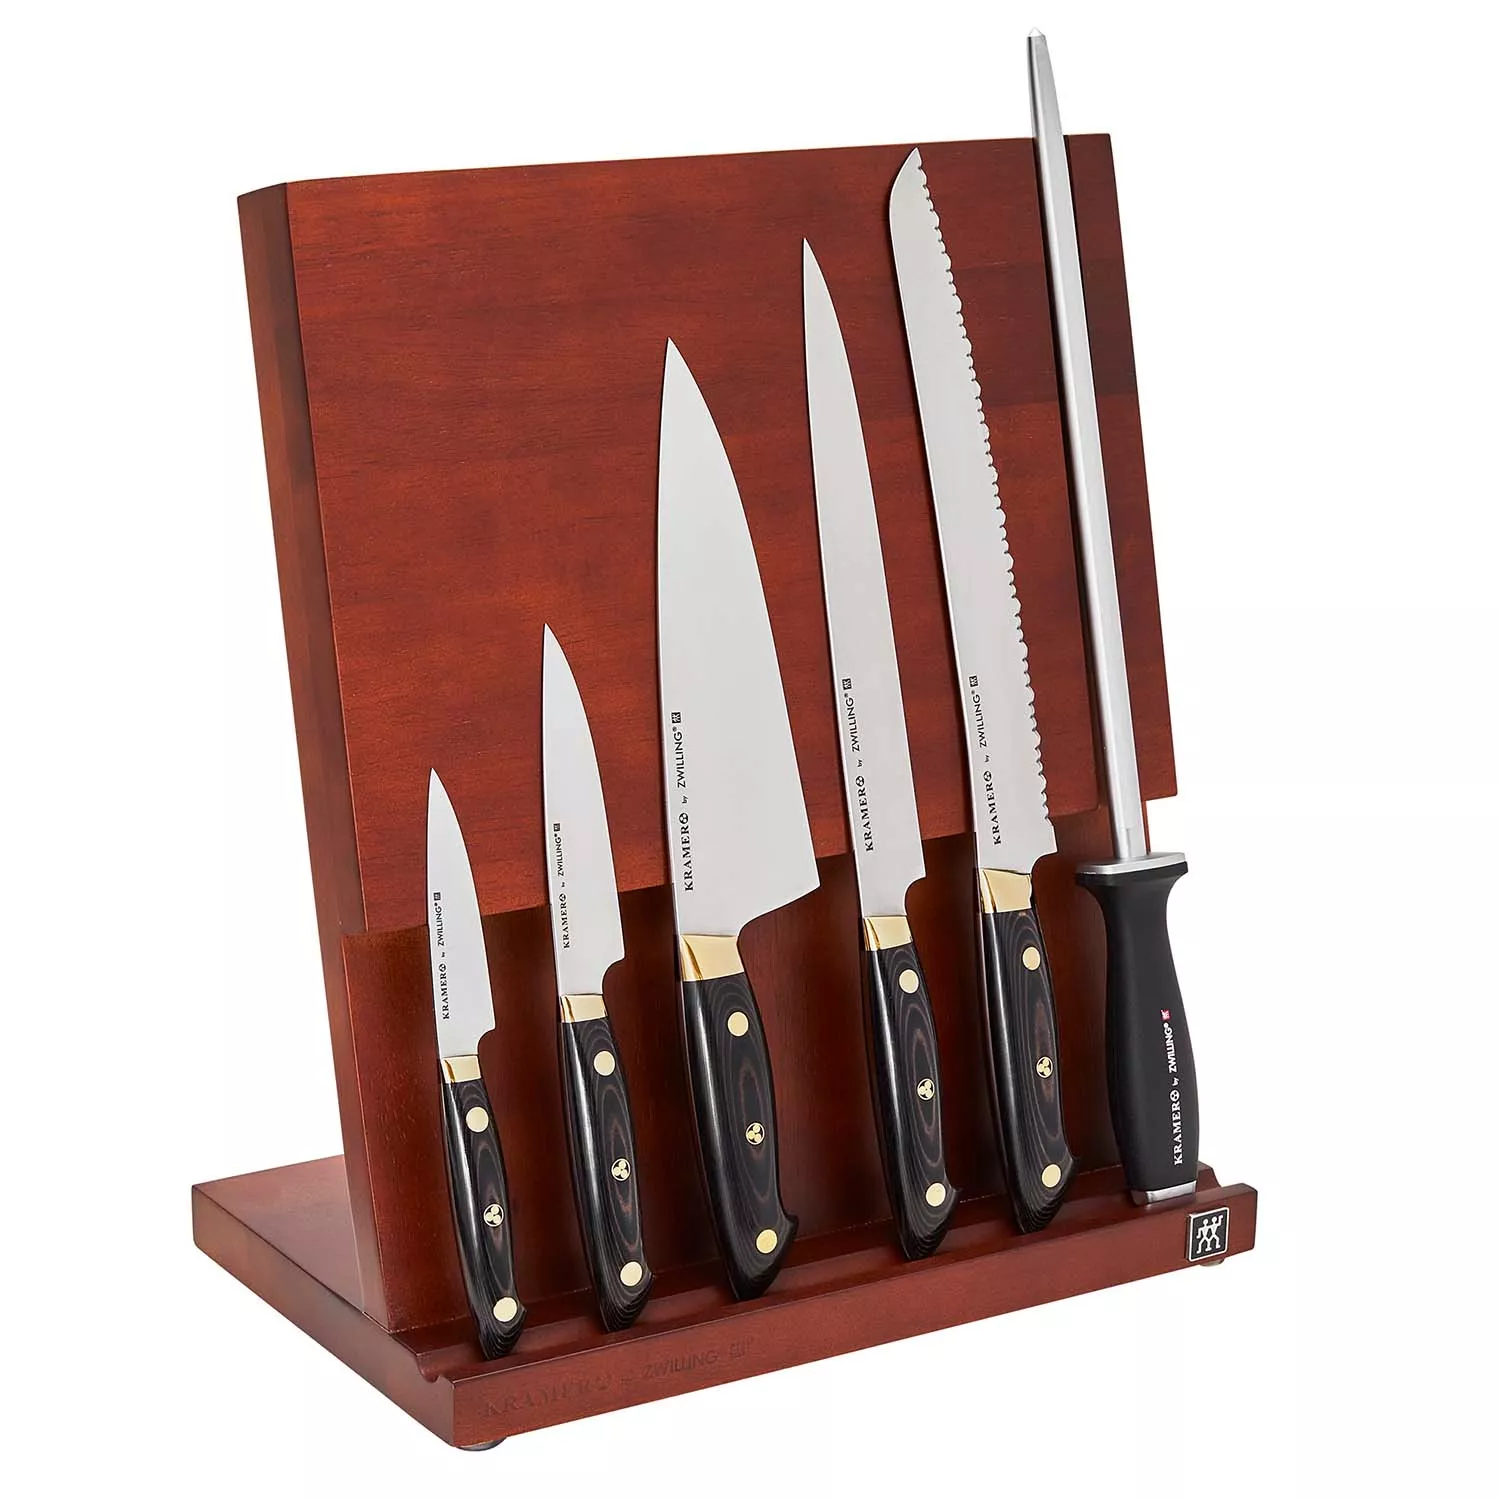 Pro Series 2.0 11pc Acacia Wood Knife Block Set